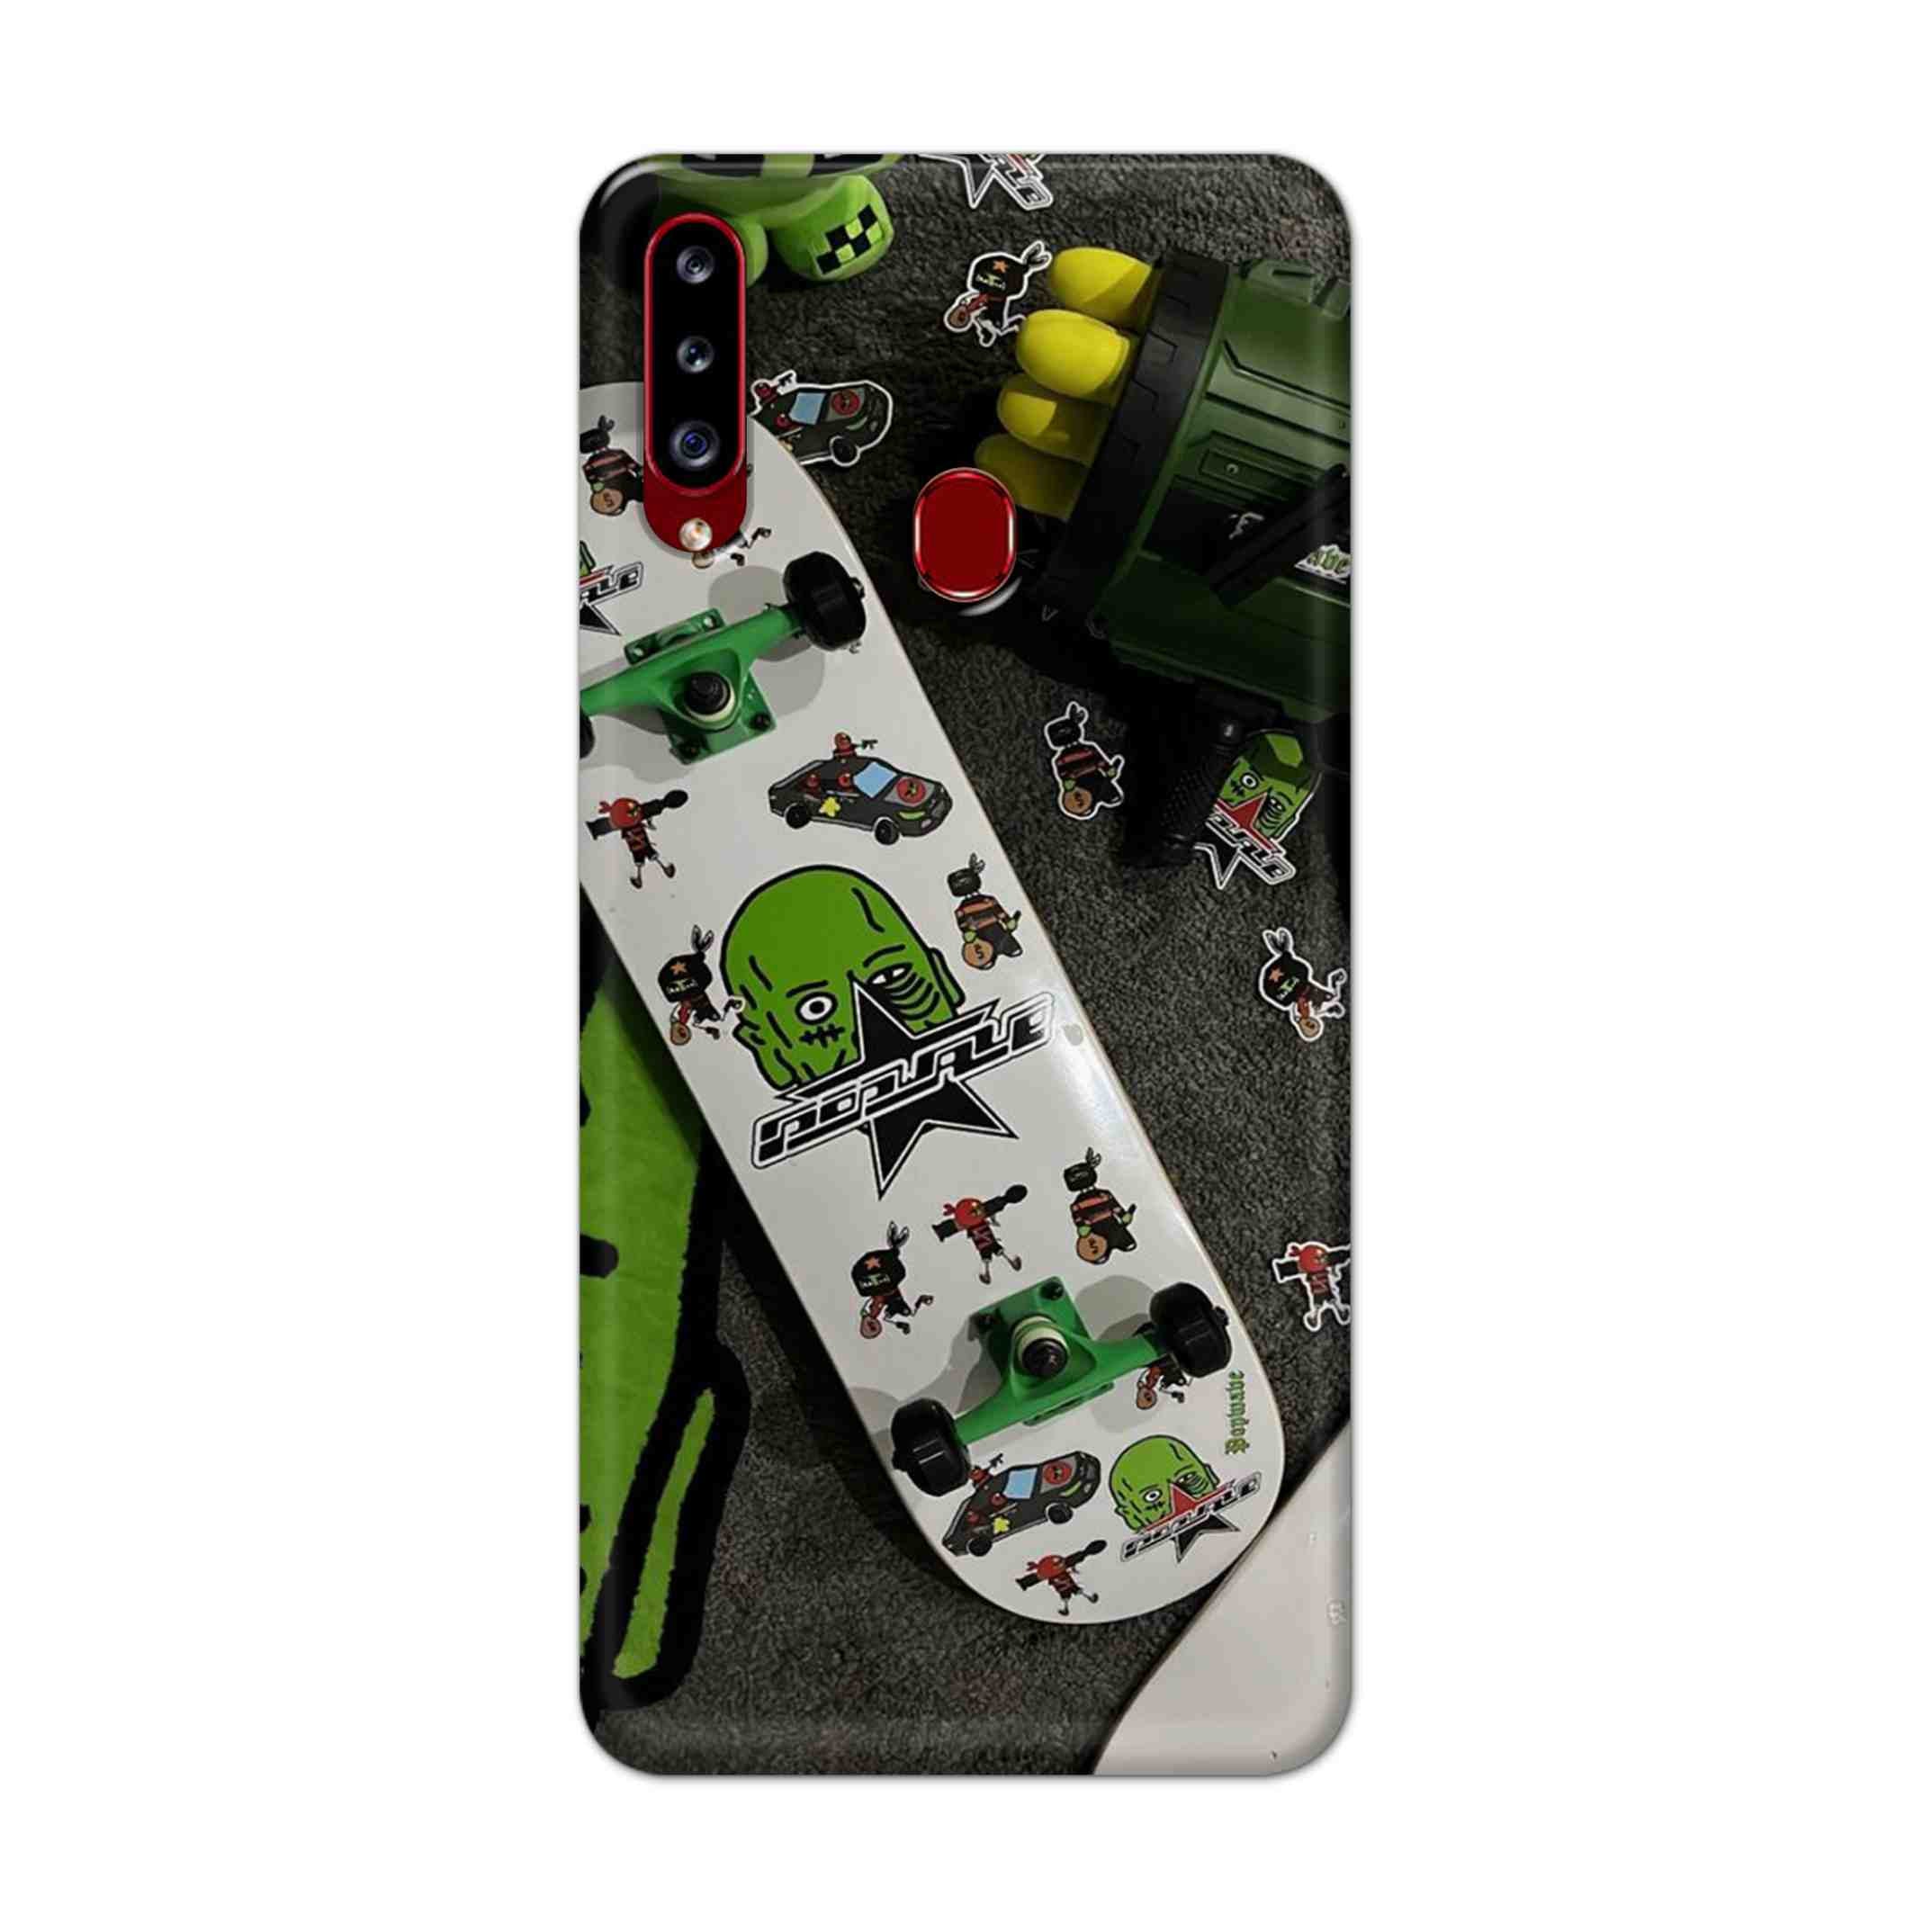 Buy Hulk Skateboard Hard Back Mobile Phone Case Cover For Samsung A20s Online